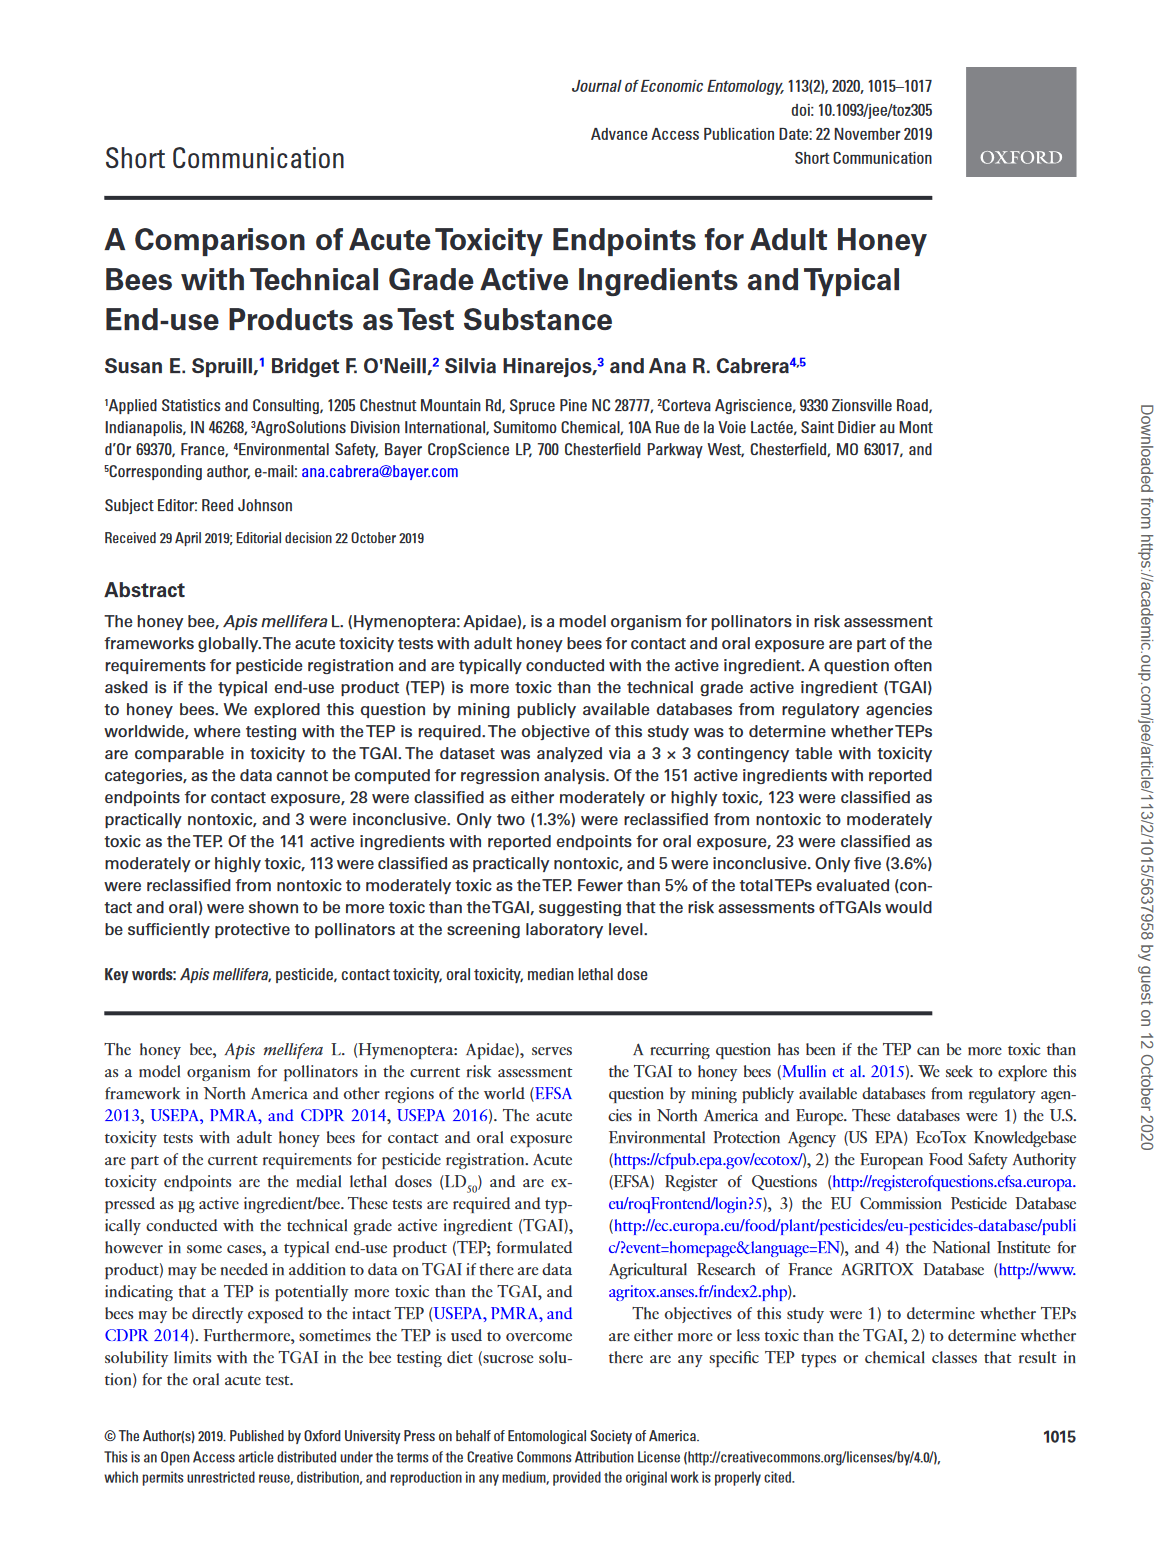 Comparison-of-acute-toxicity-endpoints